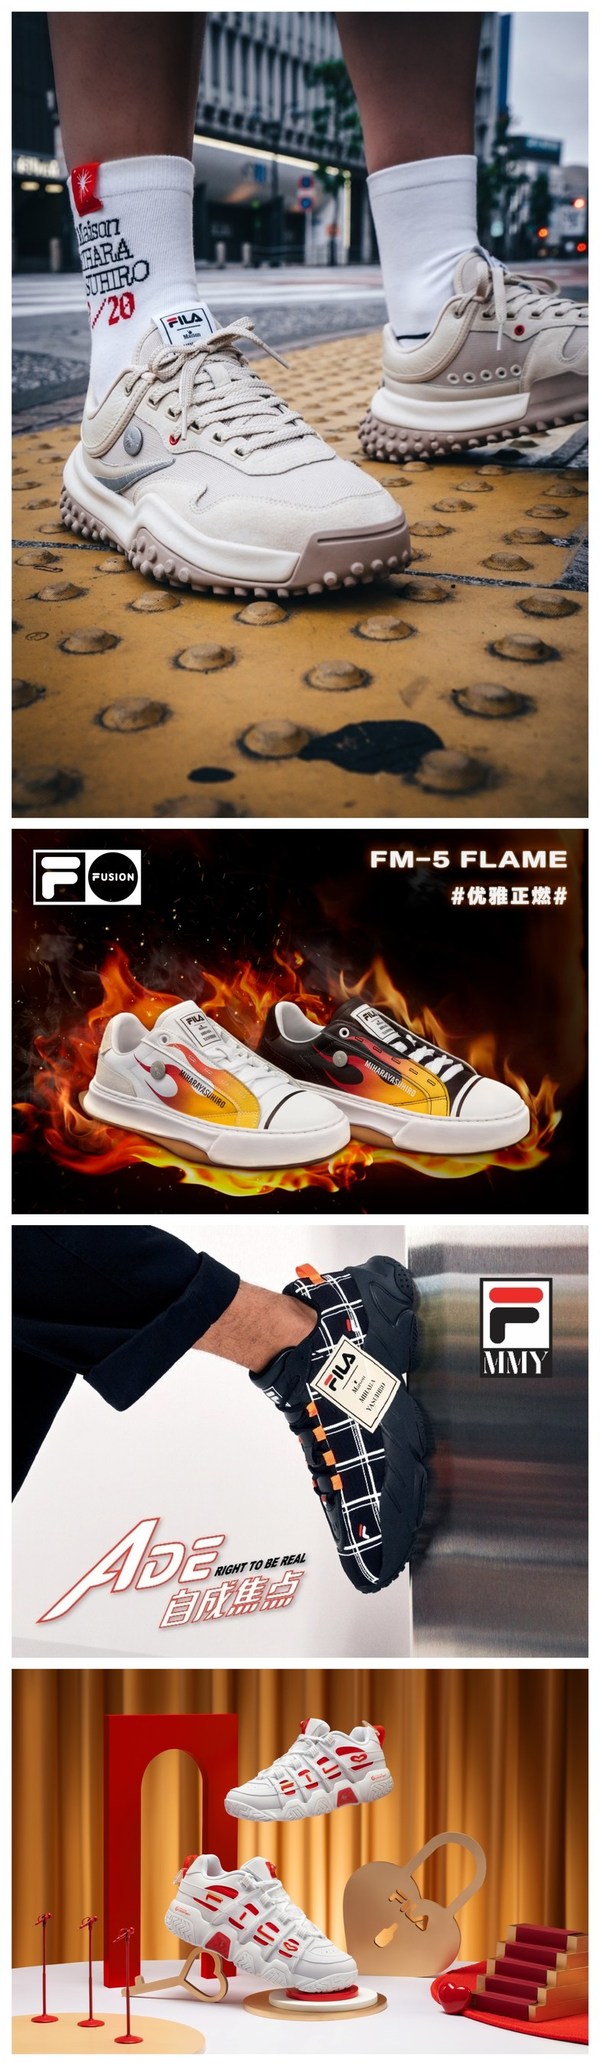 FILA “波点鞋” 、FILA FUSION“火焰鞋”、FILA“格子鞋”、FILA“锁锁鞋”